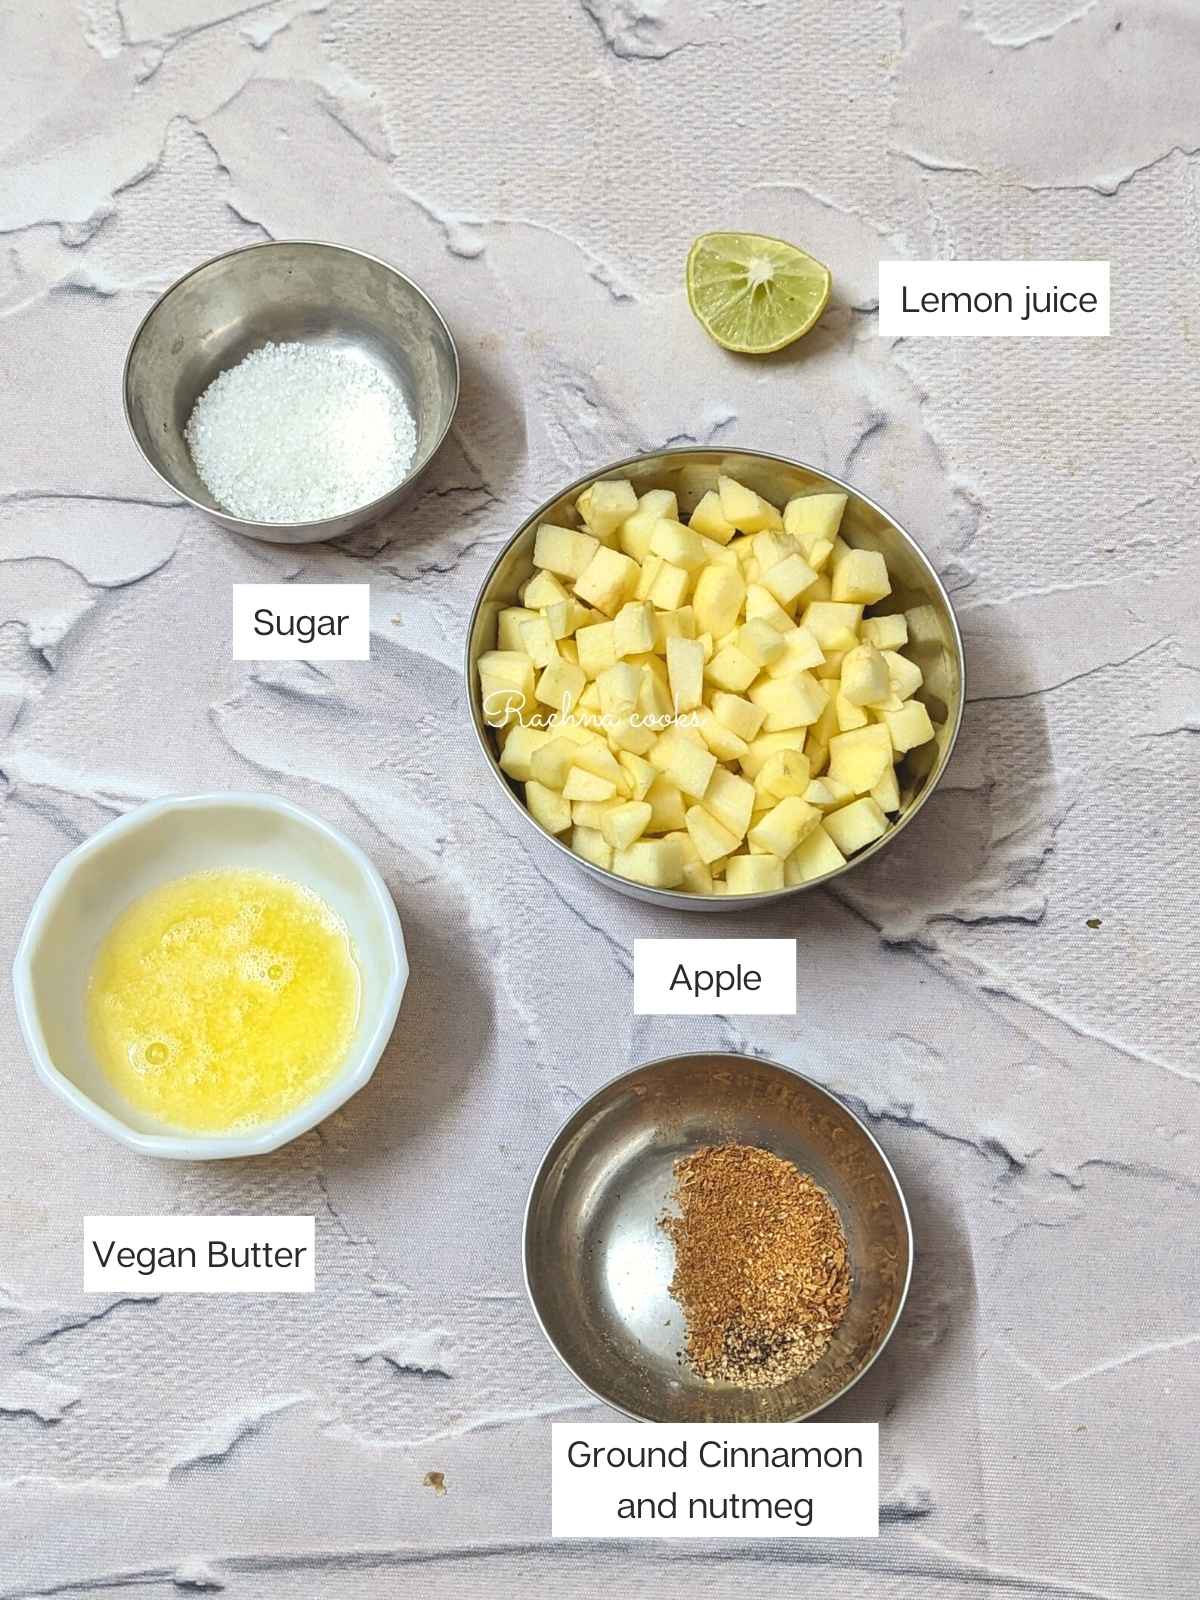 Cubed apple, vegan butter, cinnamon and nutmeg, sugar, brown sugar and lemon juice in bowls